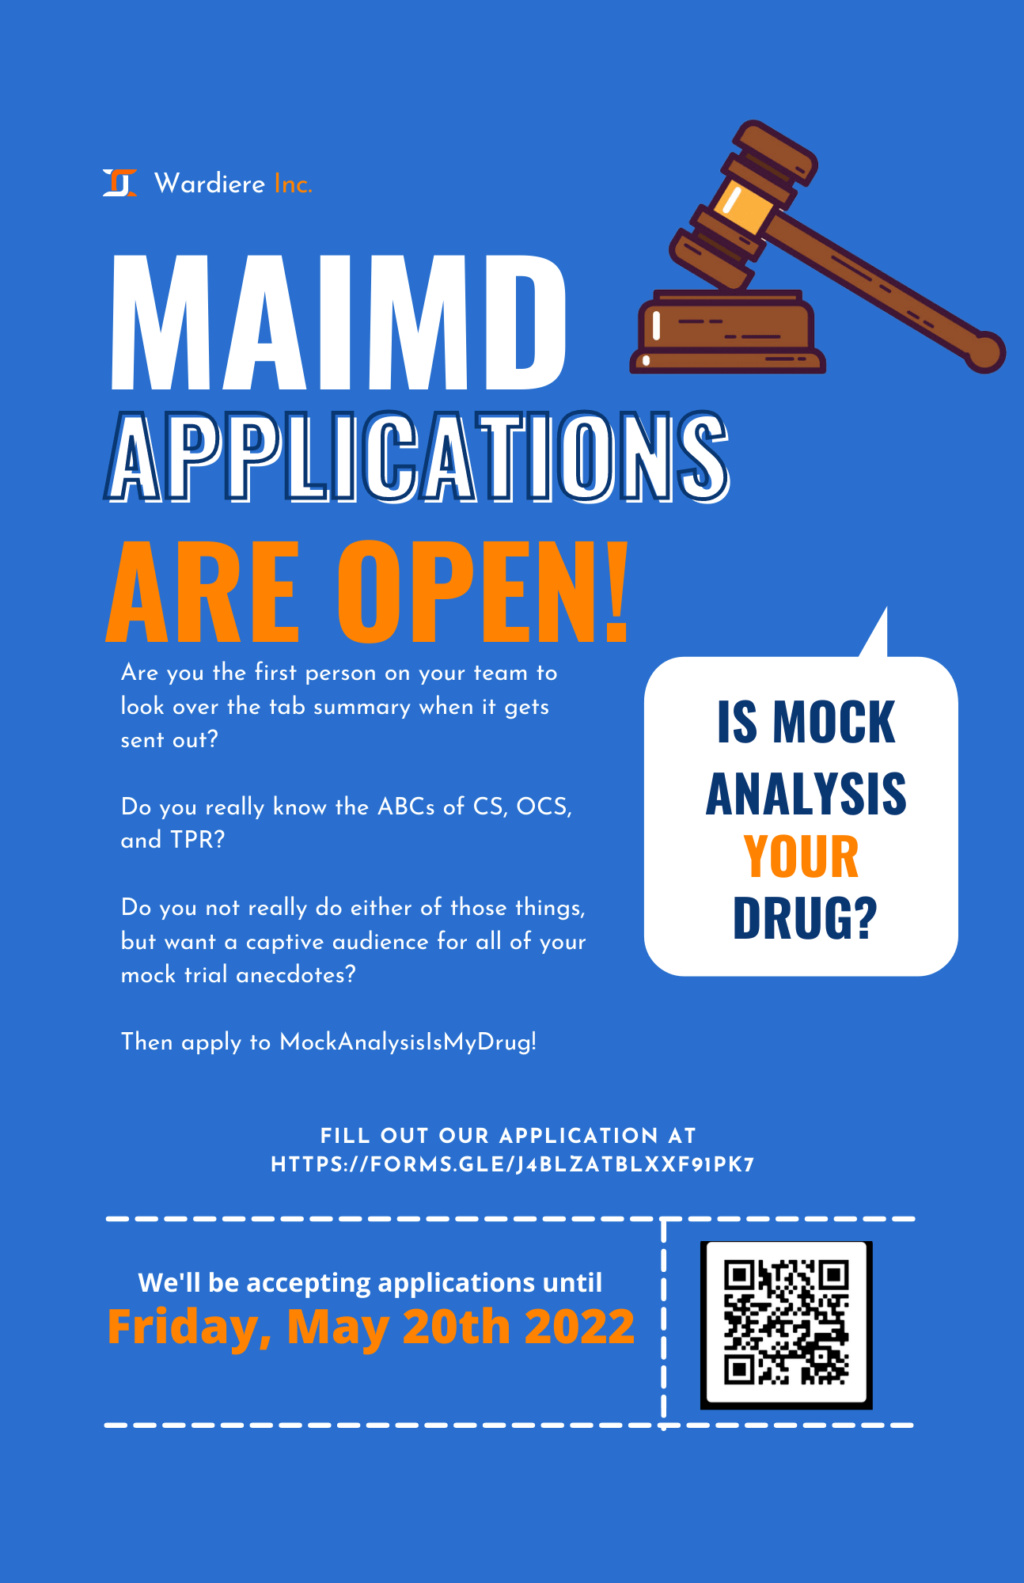 2022 MAIMD Application 1294x210